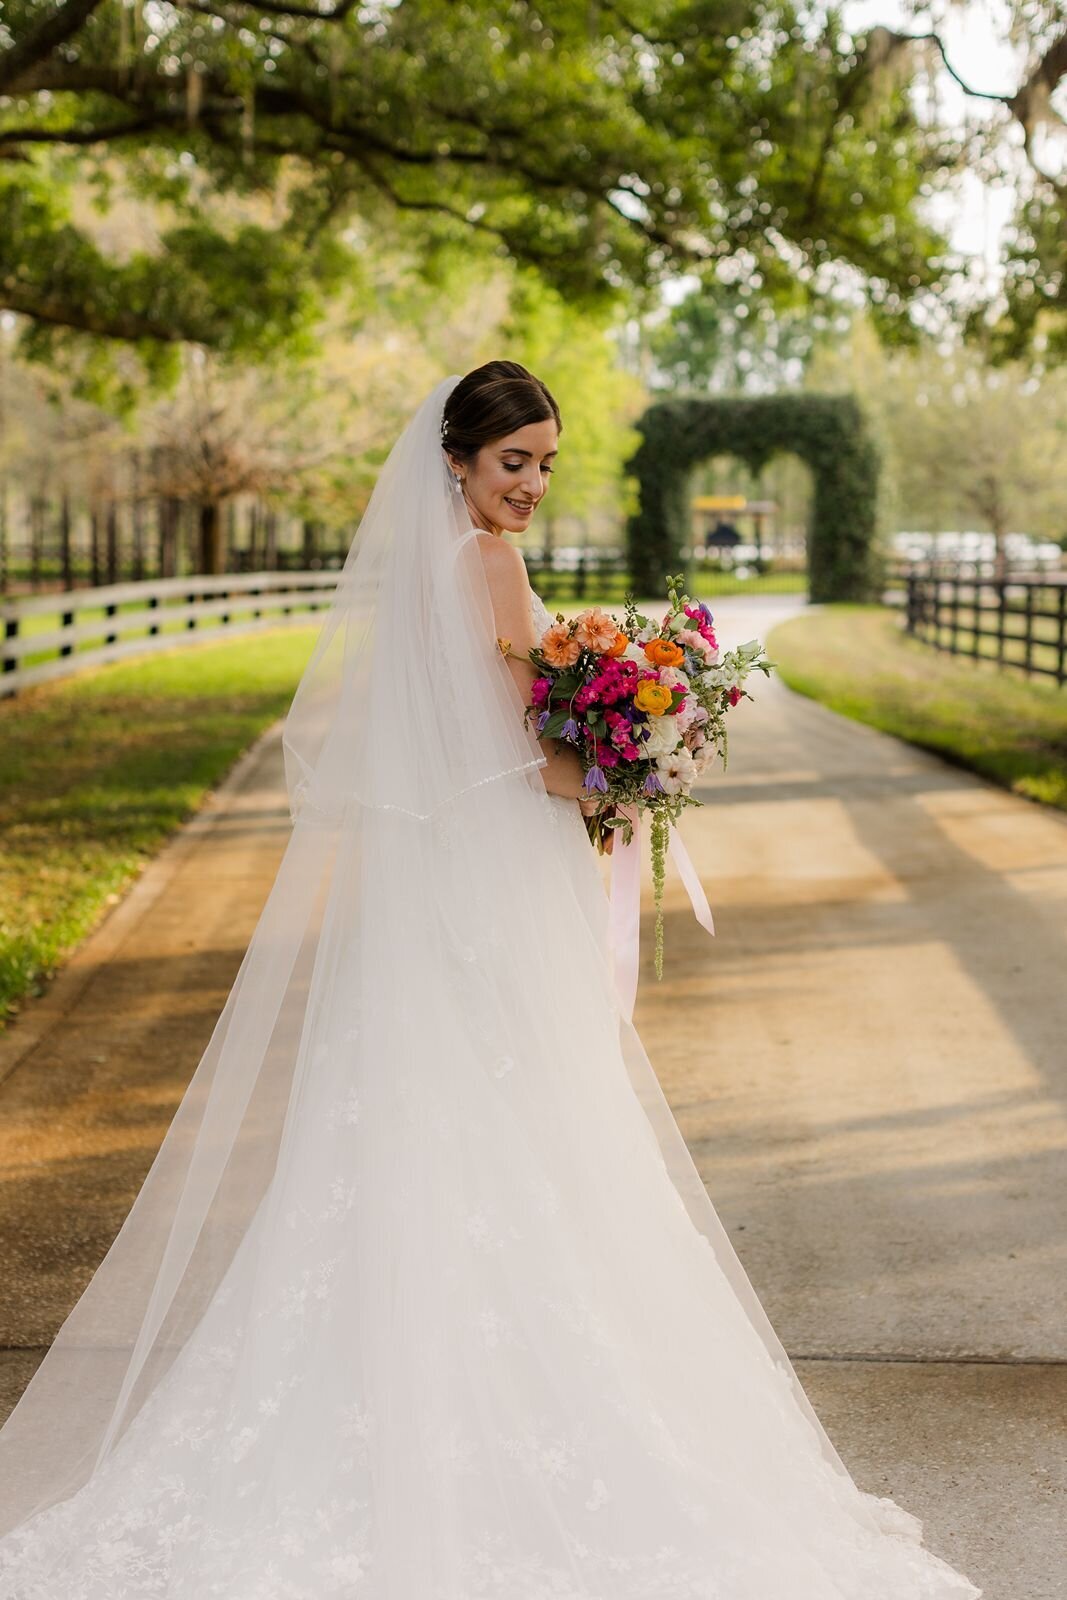 Bridal Portrait with veil and florals at Club Lake Plantation Apopka Florida